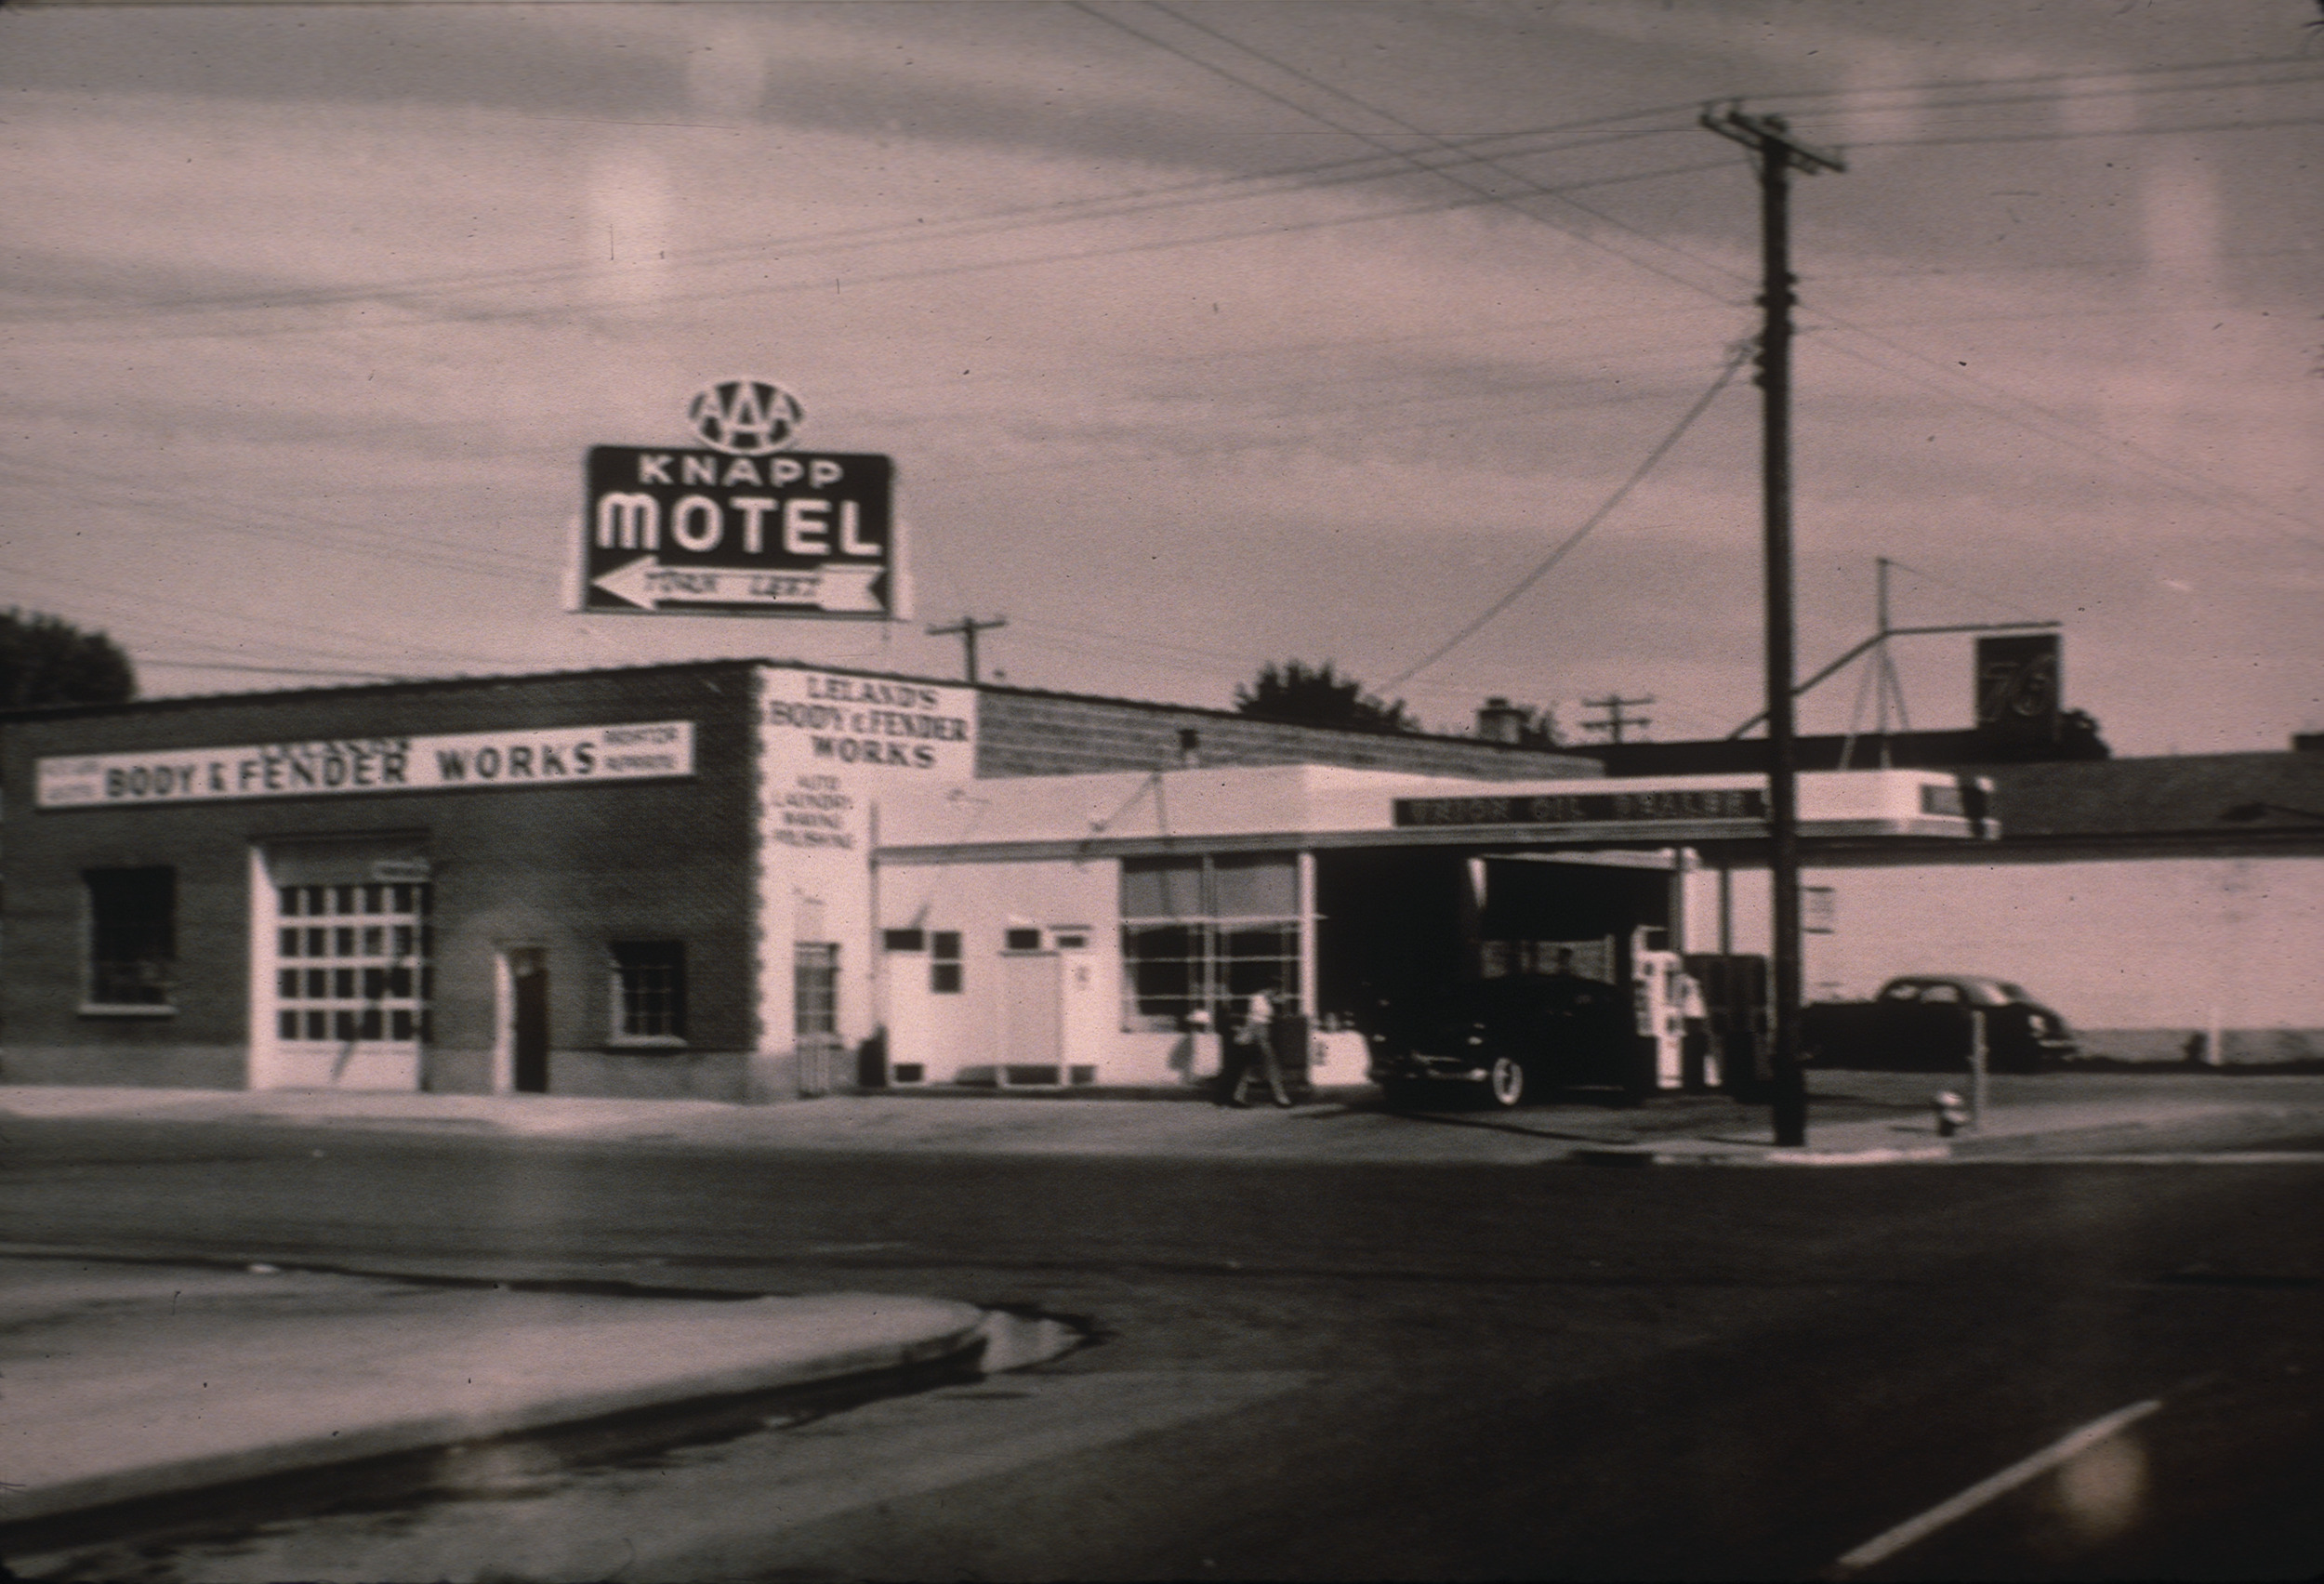 Slide of the Knapp Motel, Elko, Nevada, circa 1950